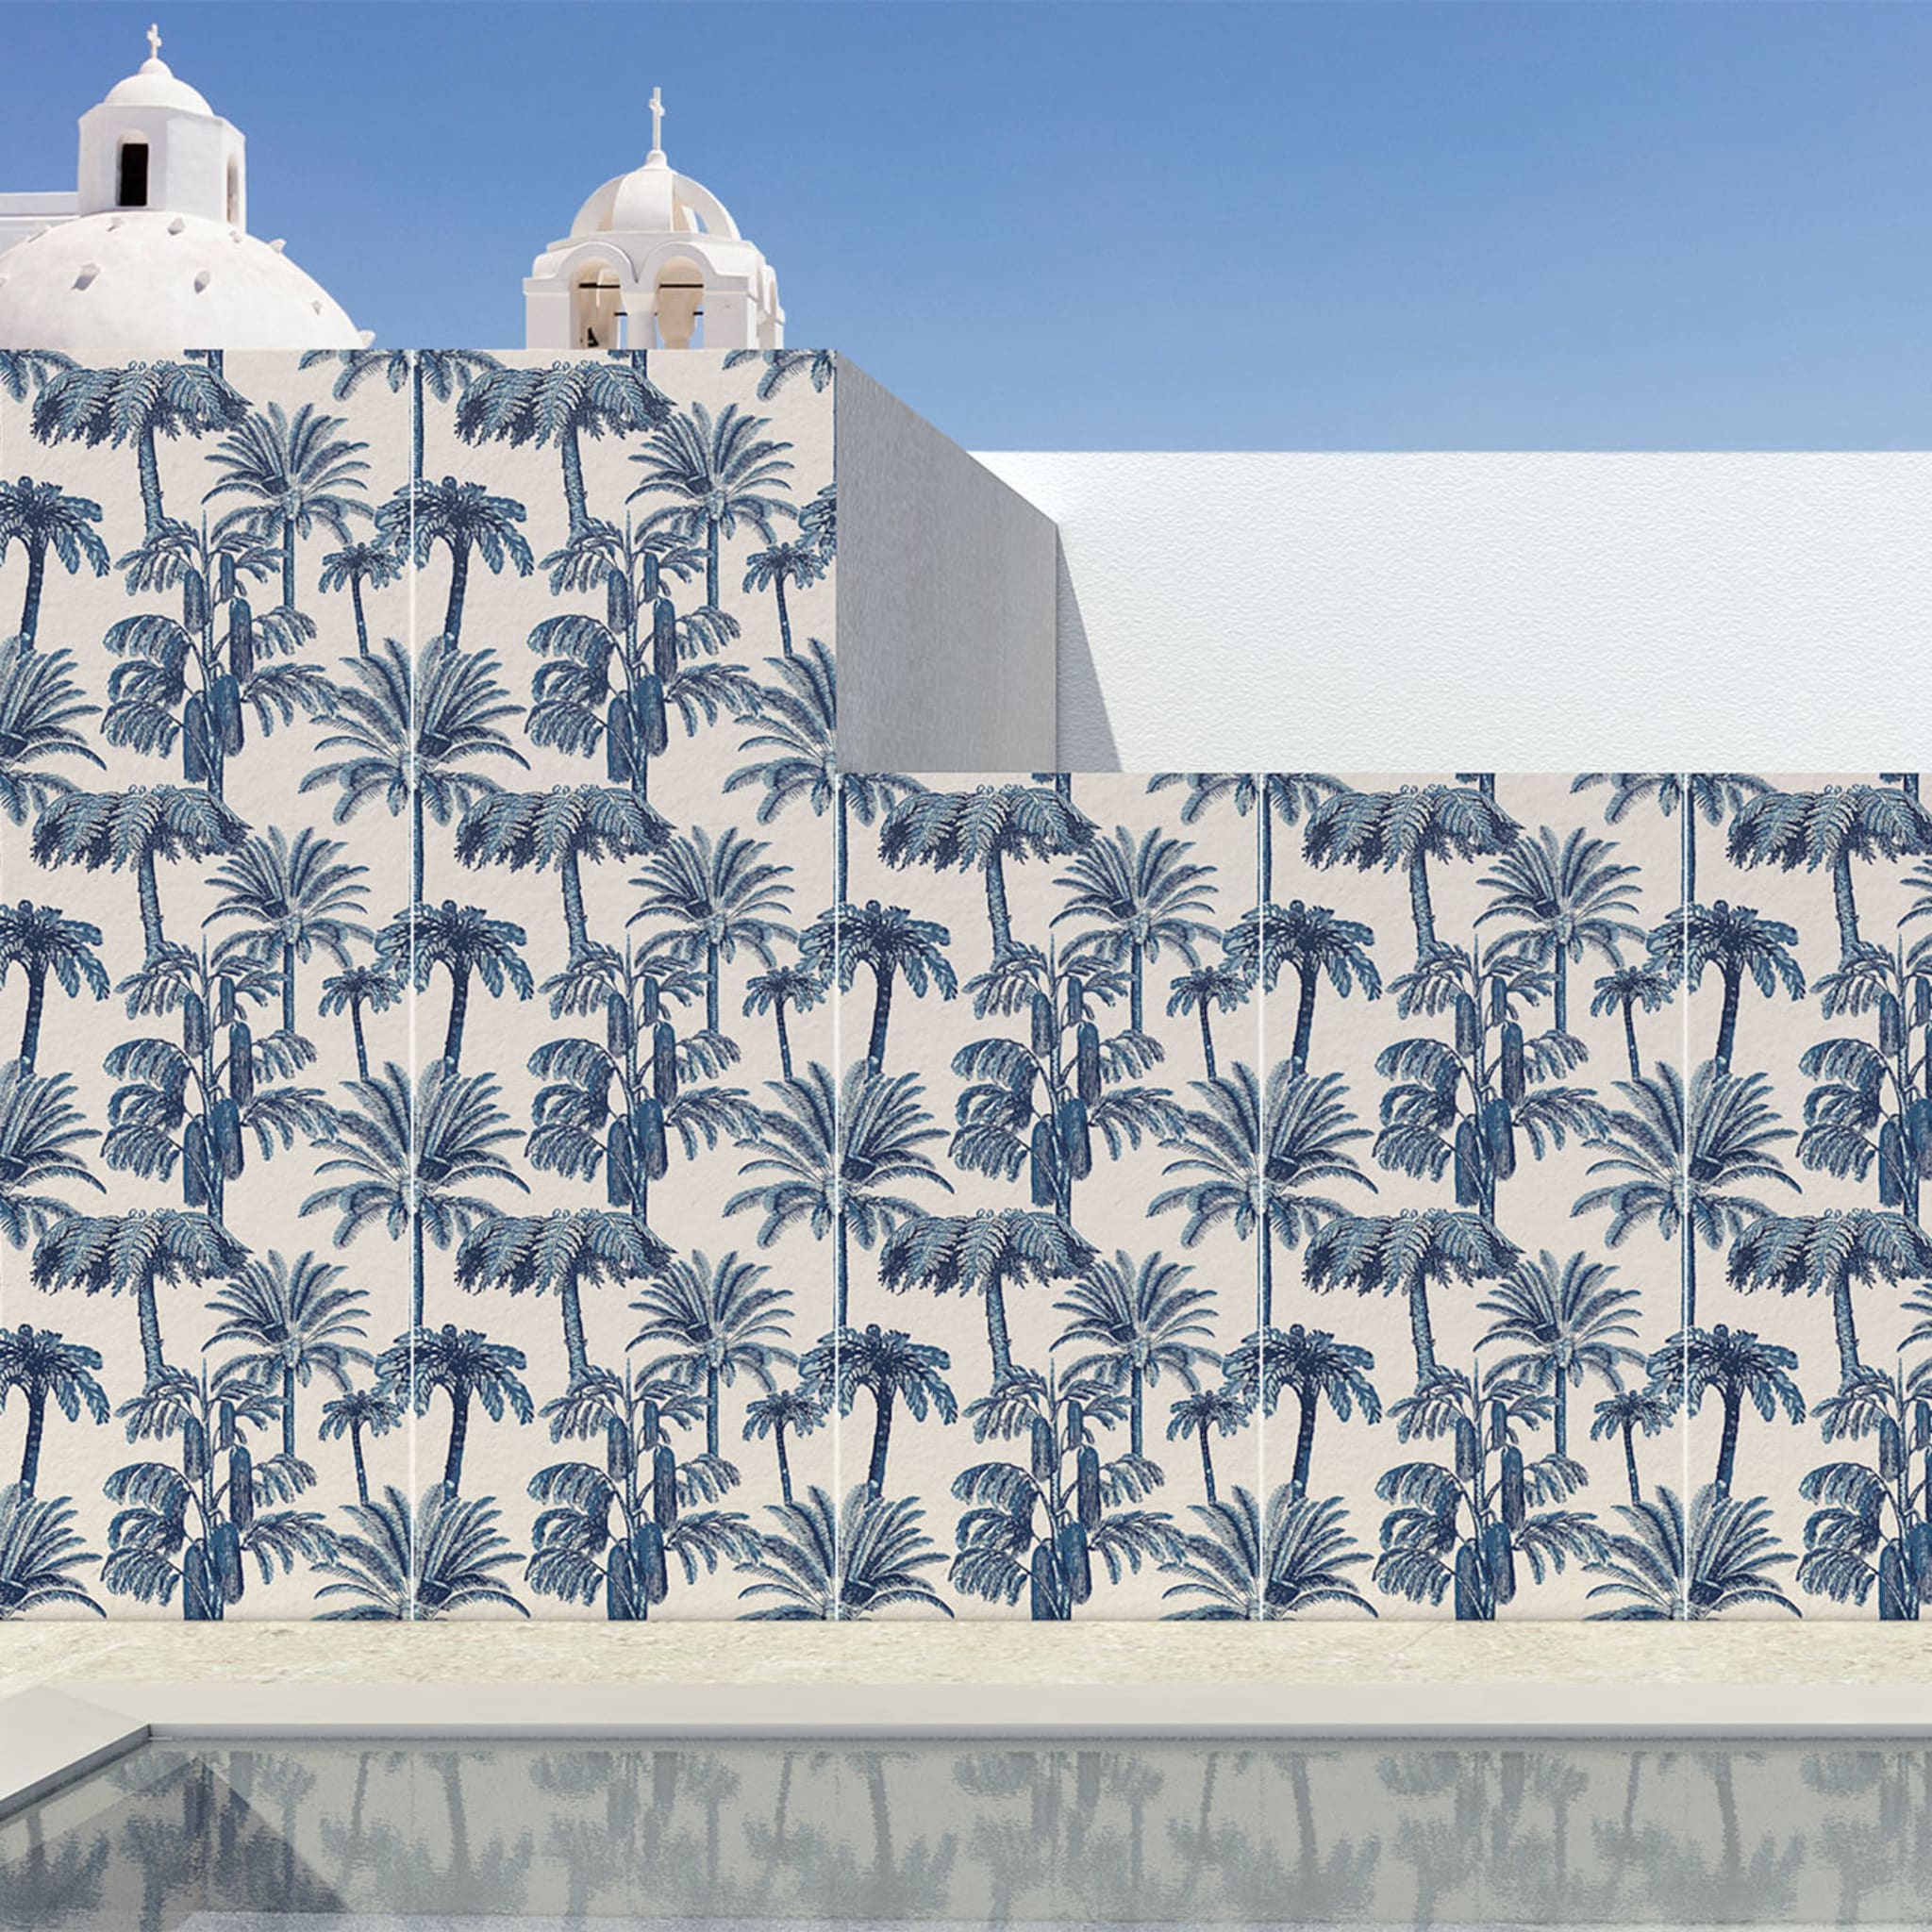 01 Blue Palms Outdoor Wallpaper - Alternative view 1